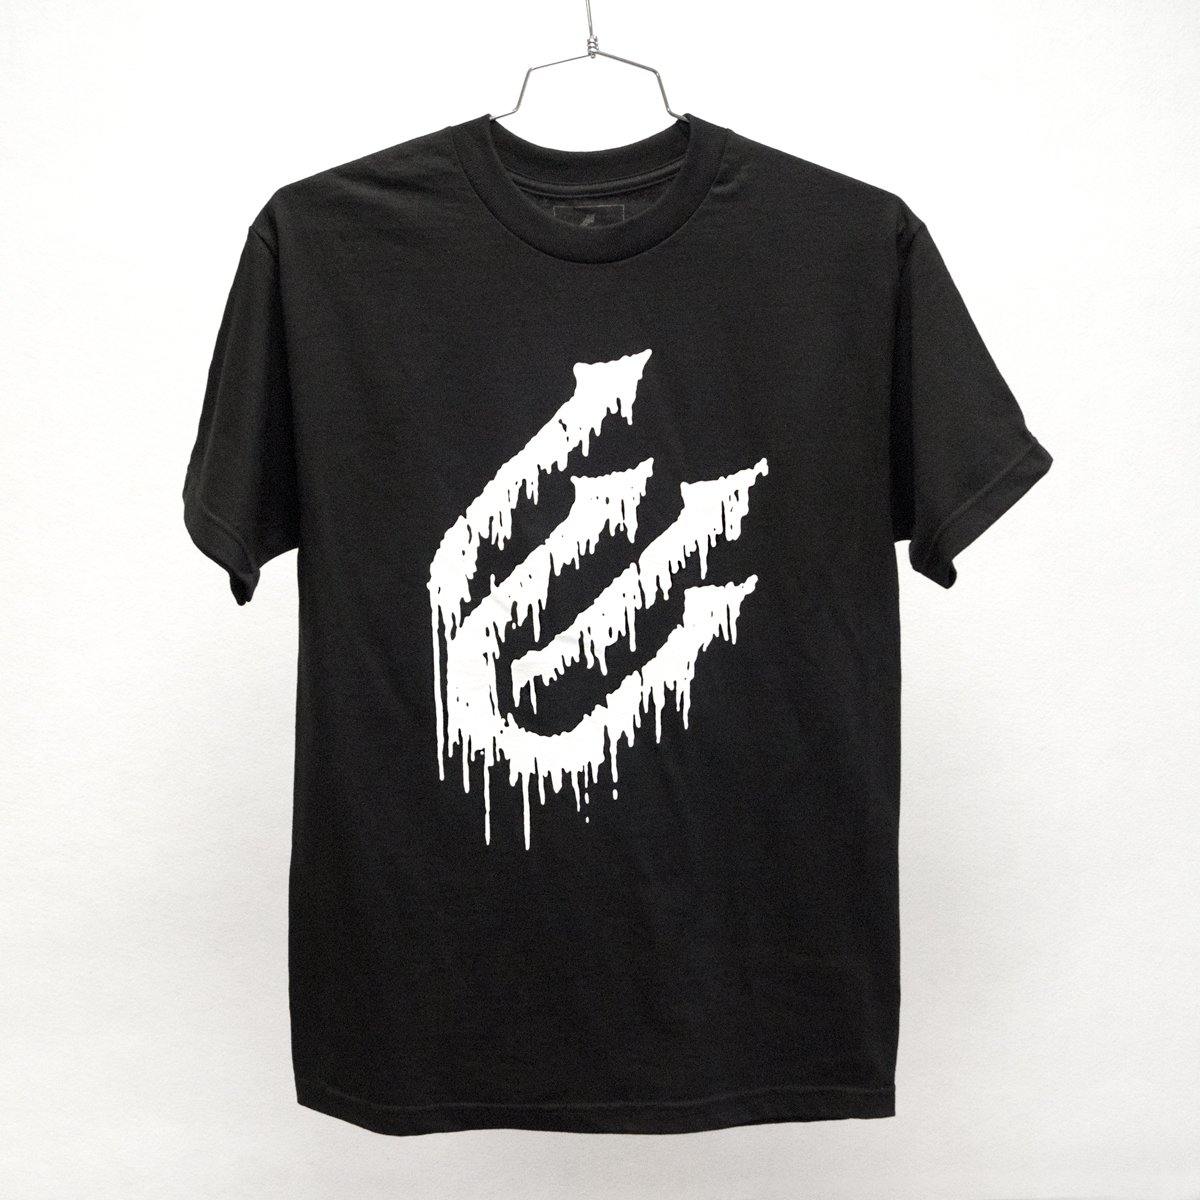 Buy – Drippy Shirt – Cold Cuts Ltd